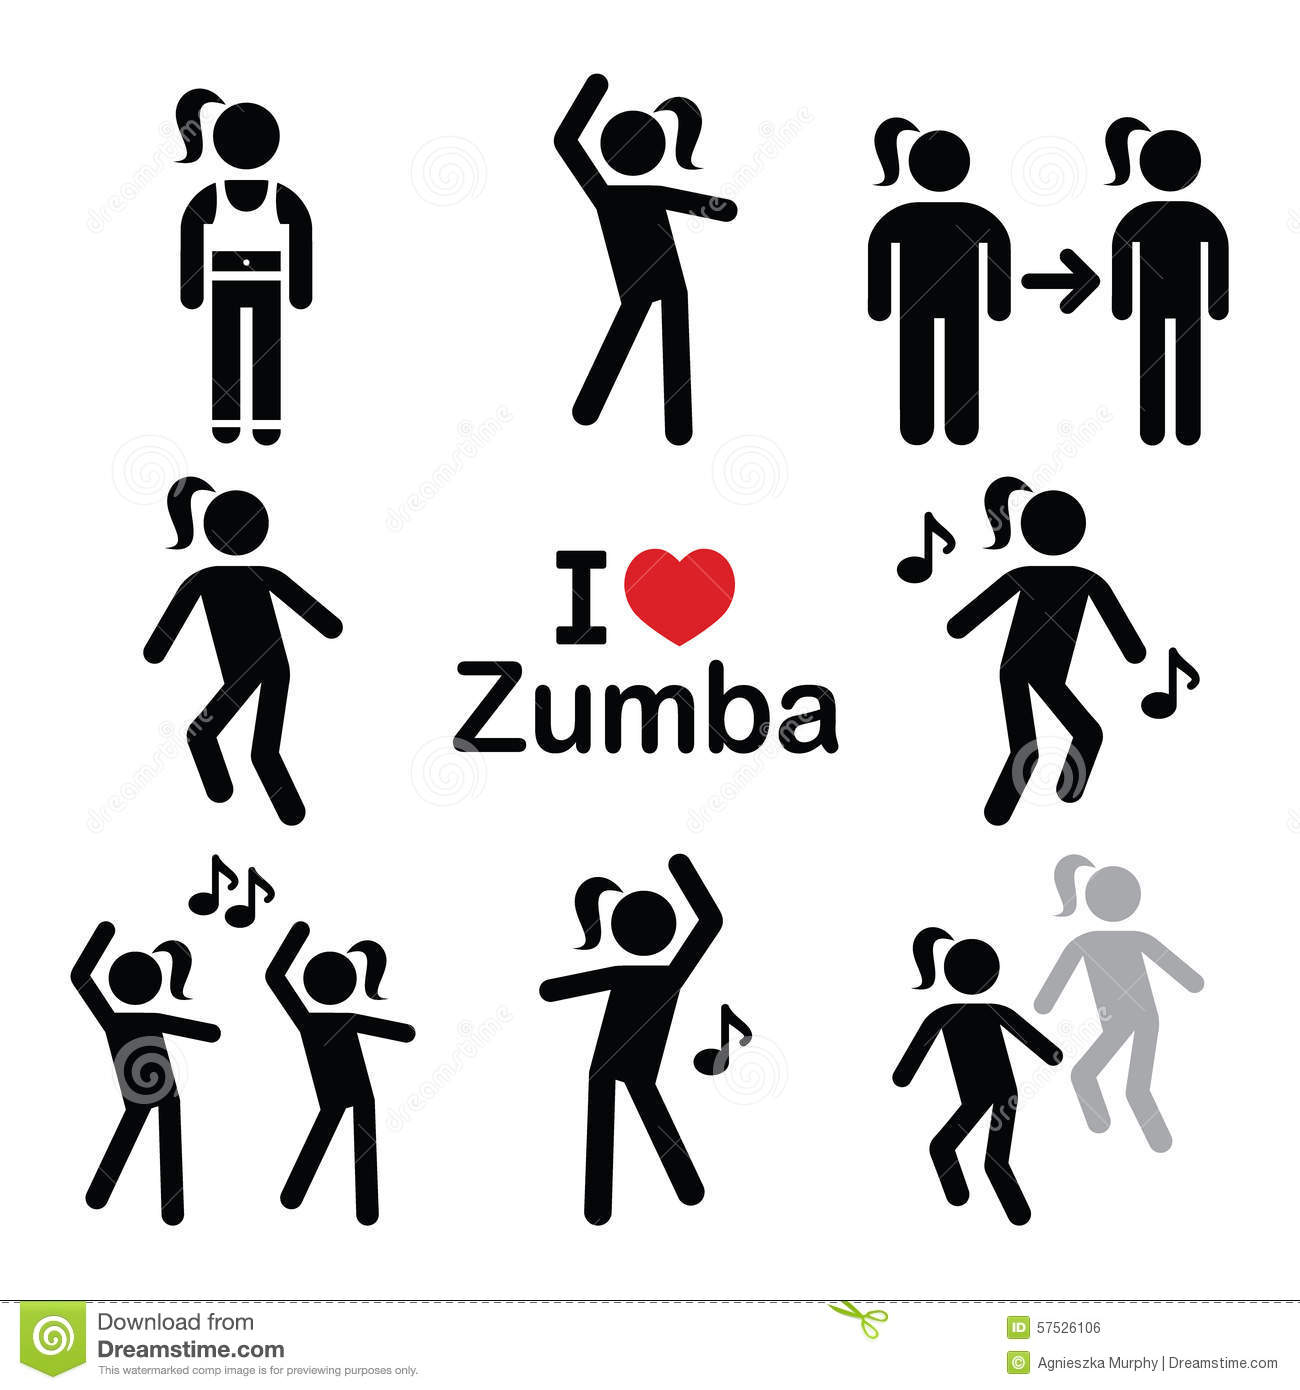 zumba fitness latin dance exercise 4 dvd torrent